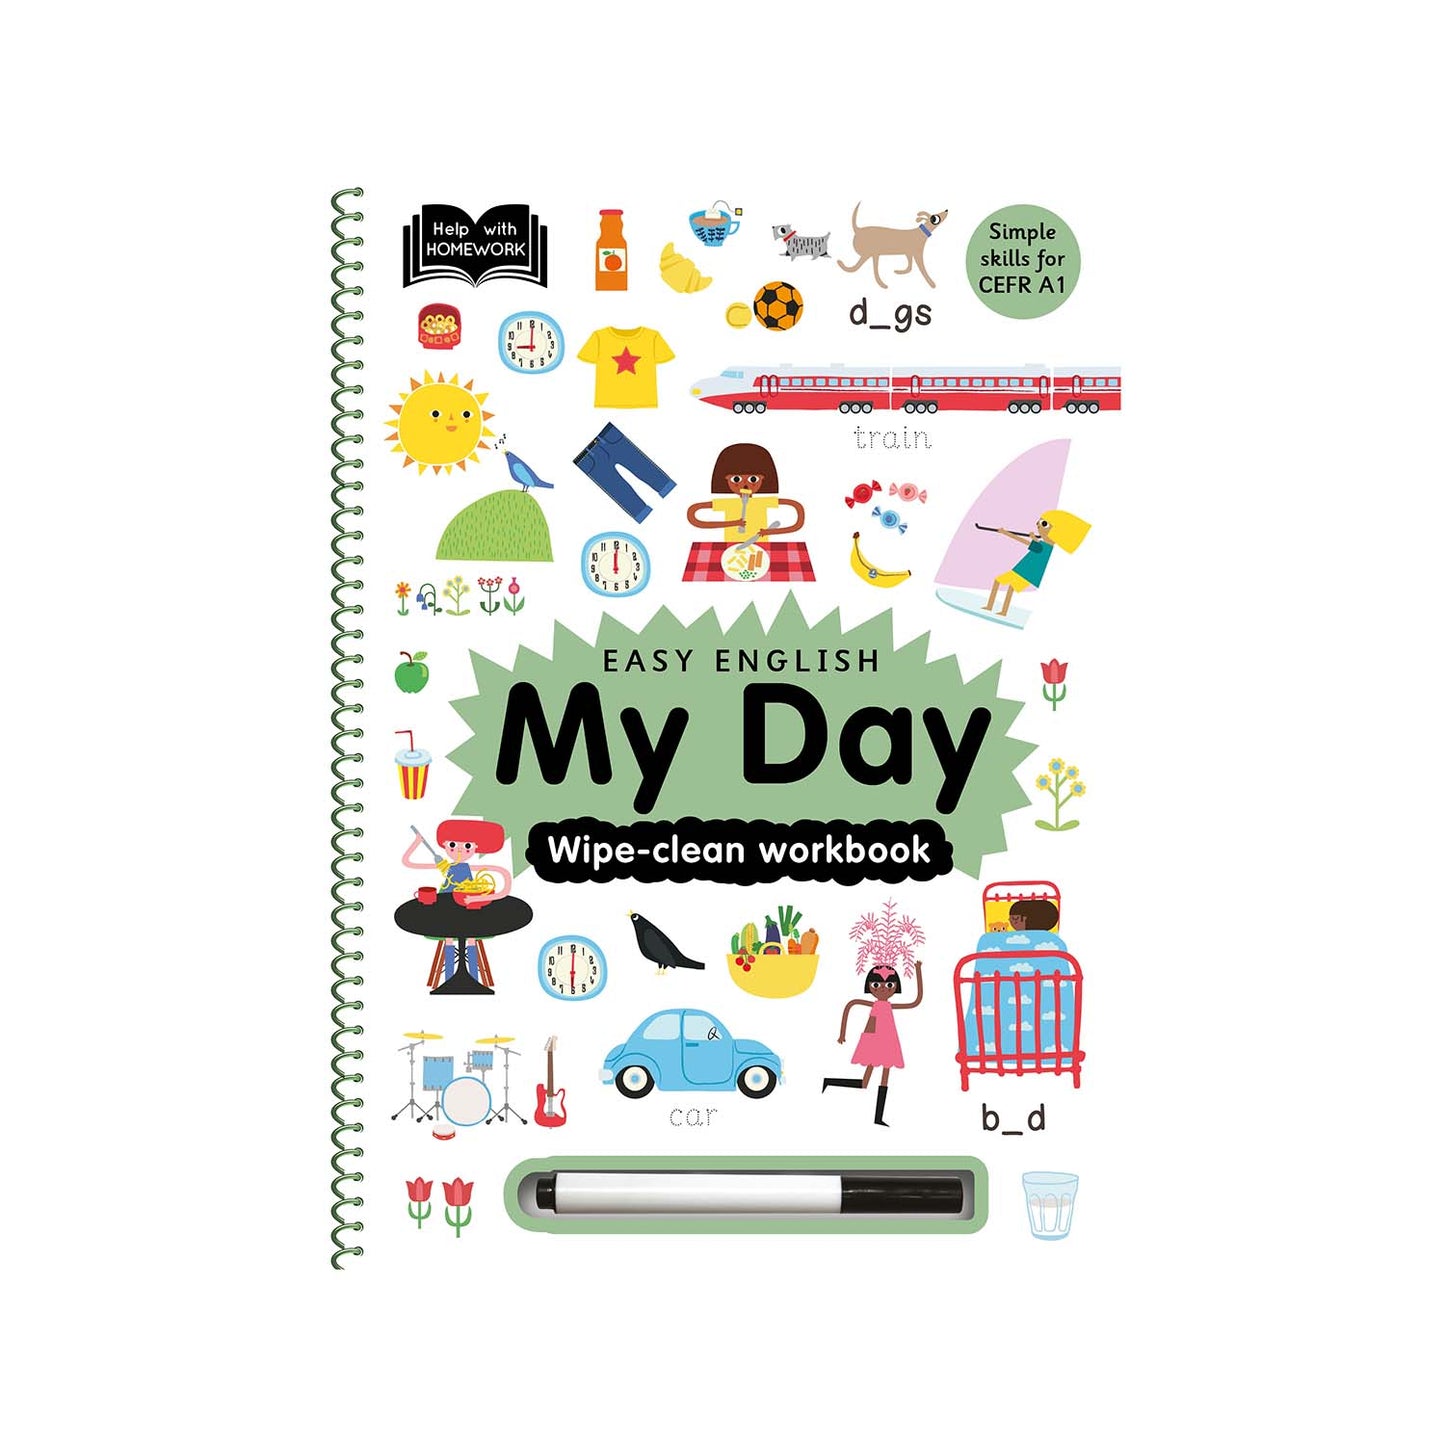 Help with Homework: Easy English My Day Wipe-clean workbook